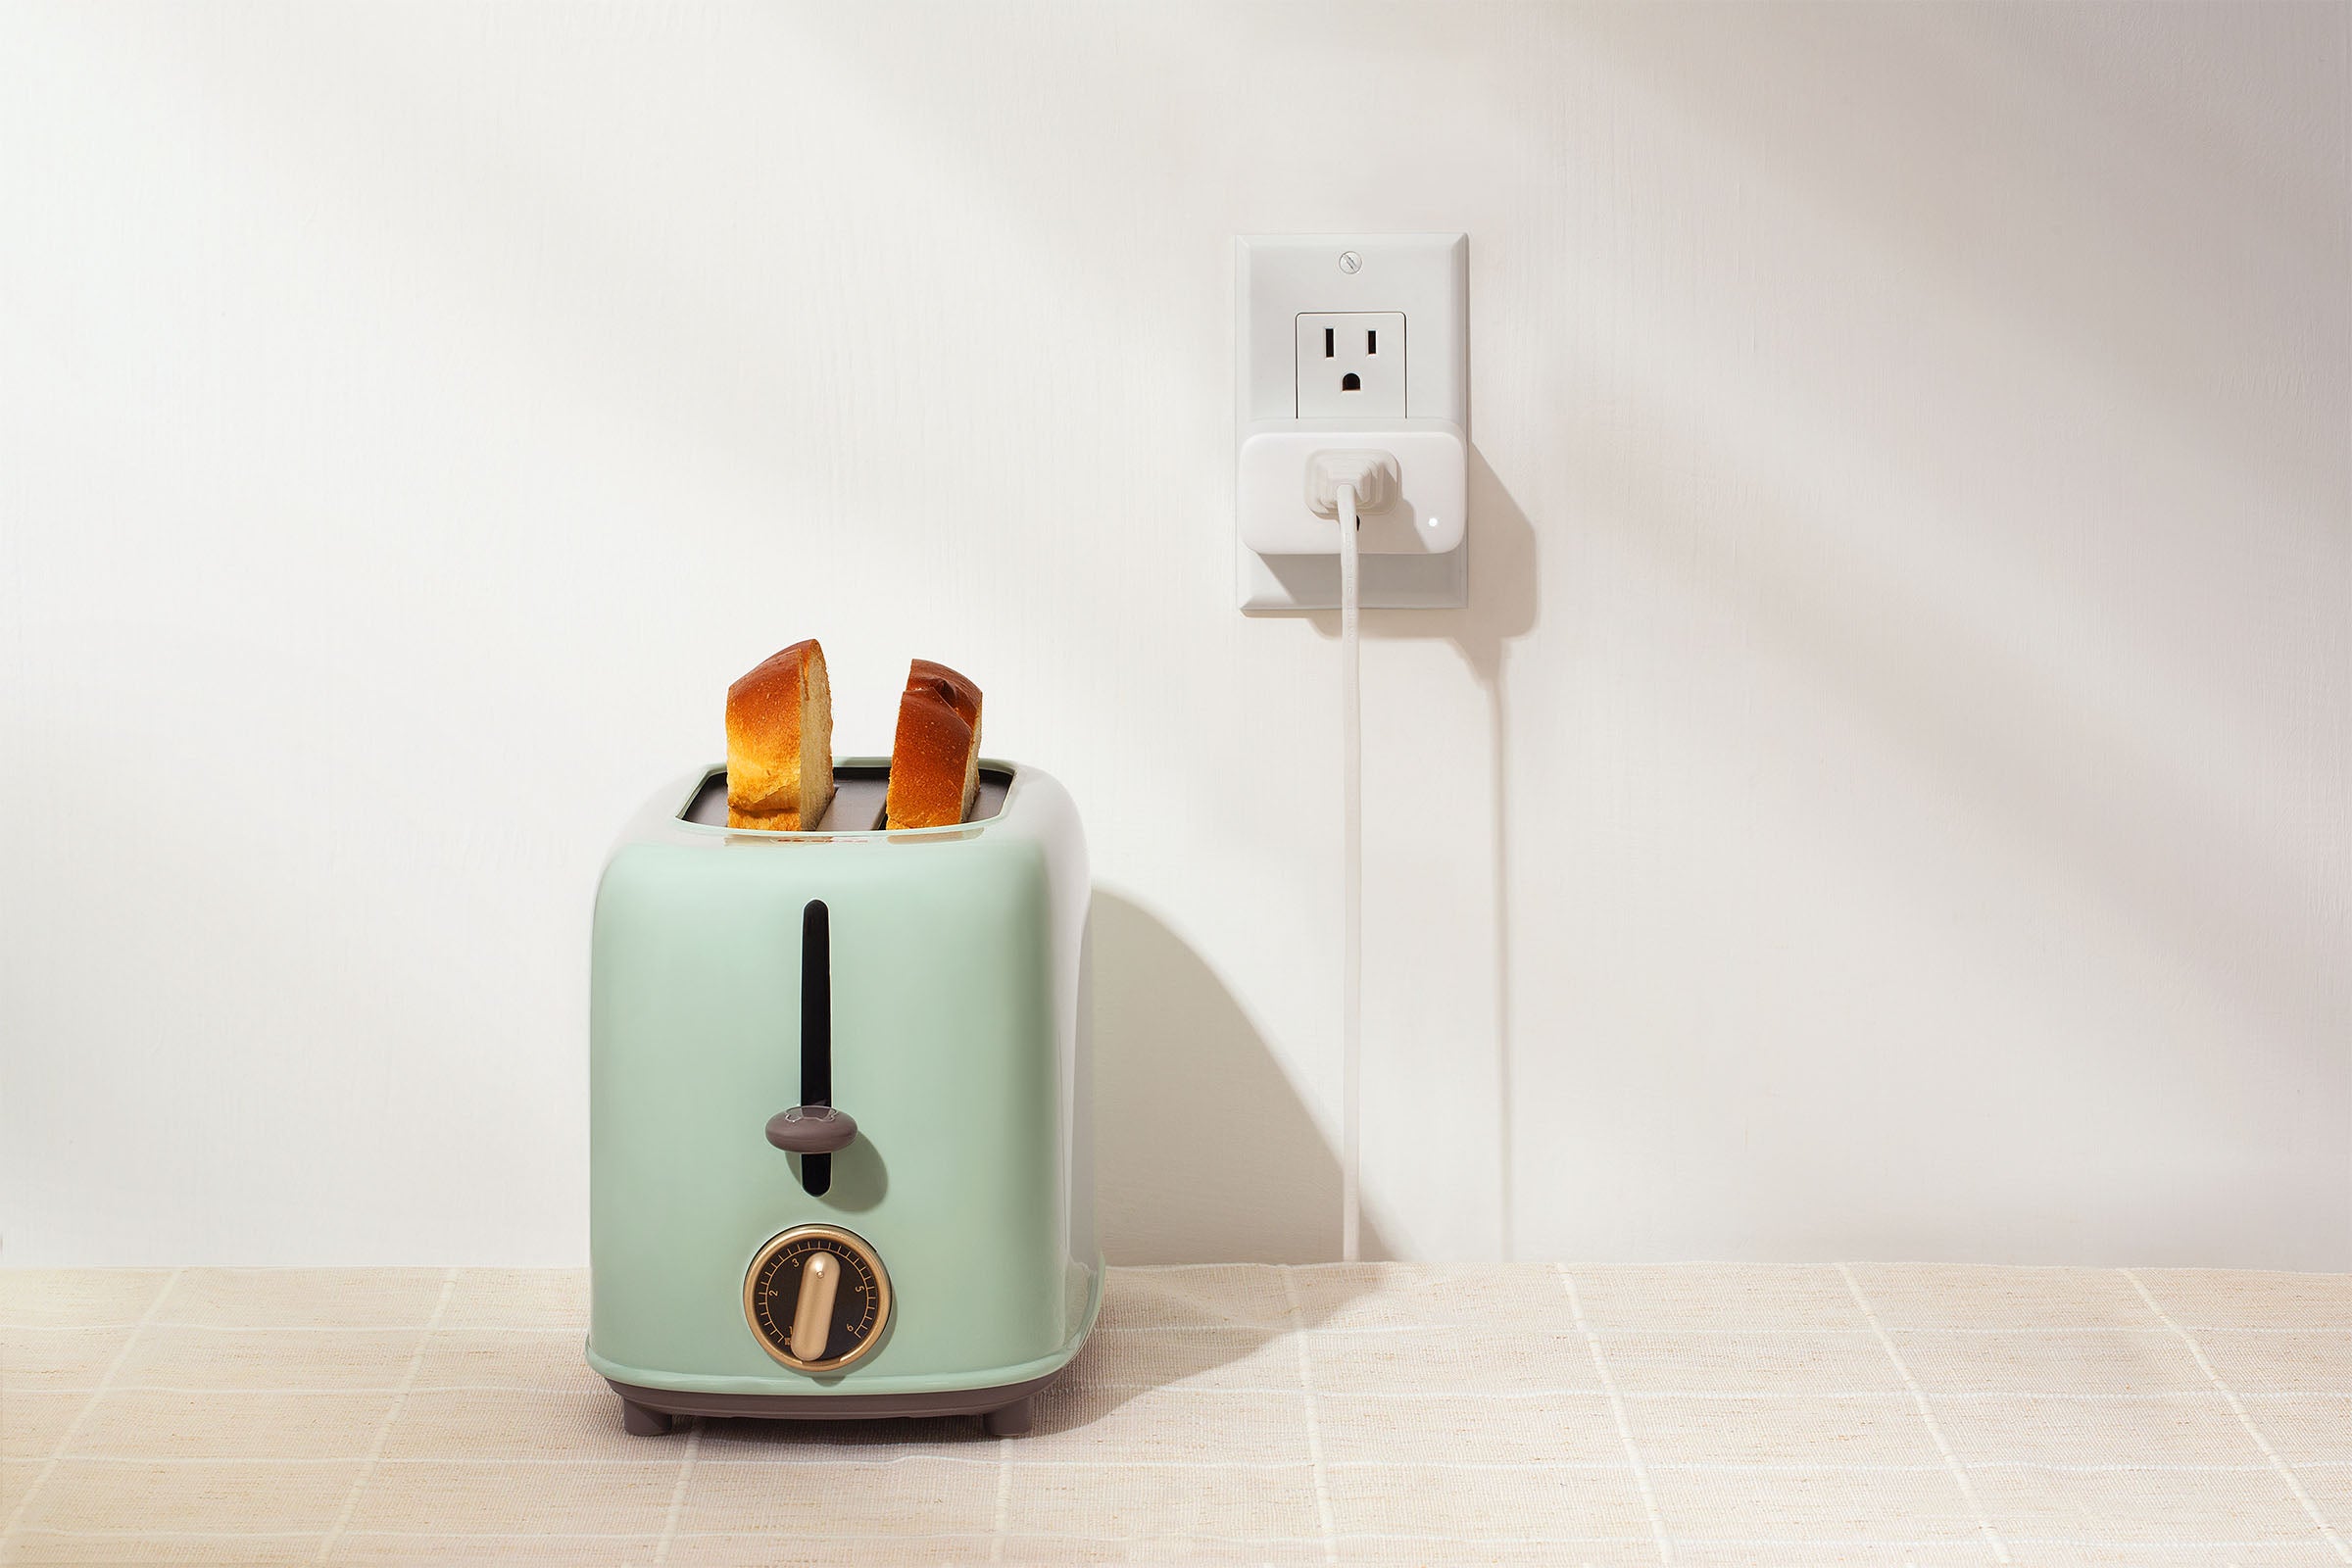 SwitchBot Smart Plug helps you control your Breakfast machine easily.